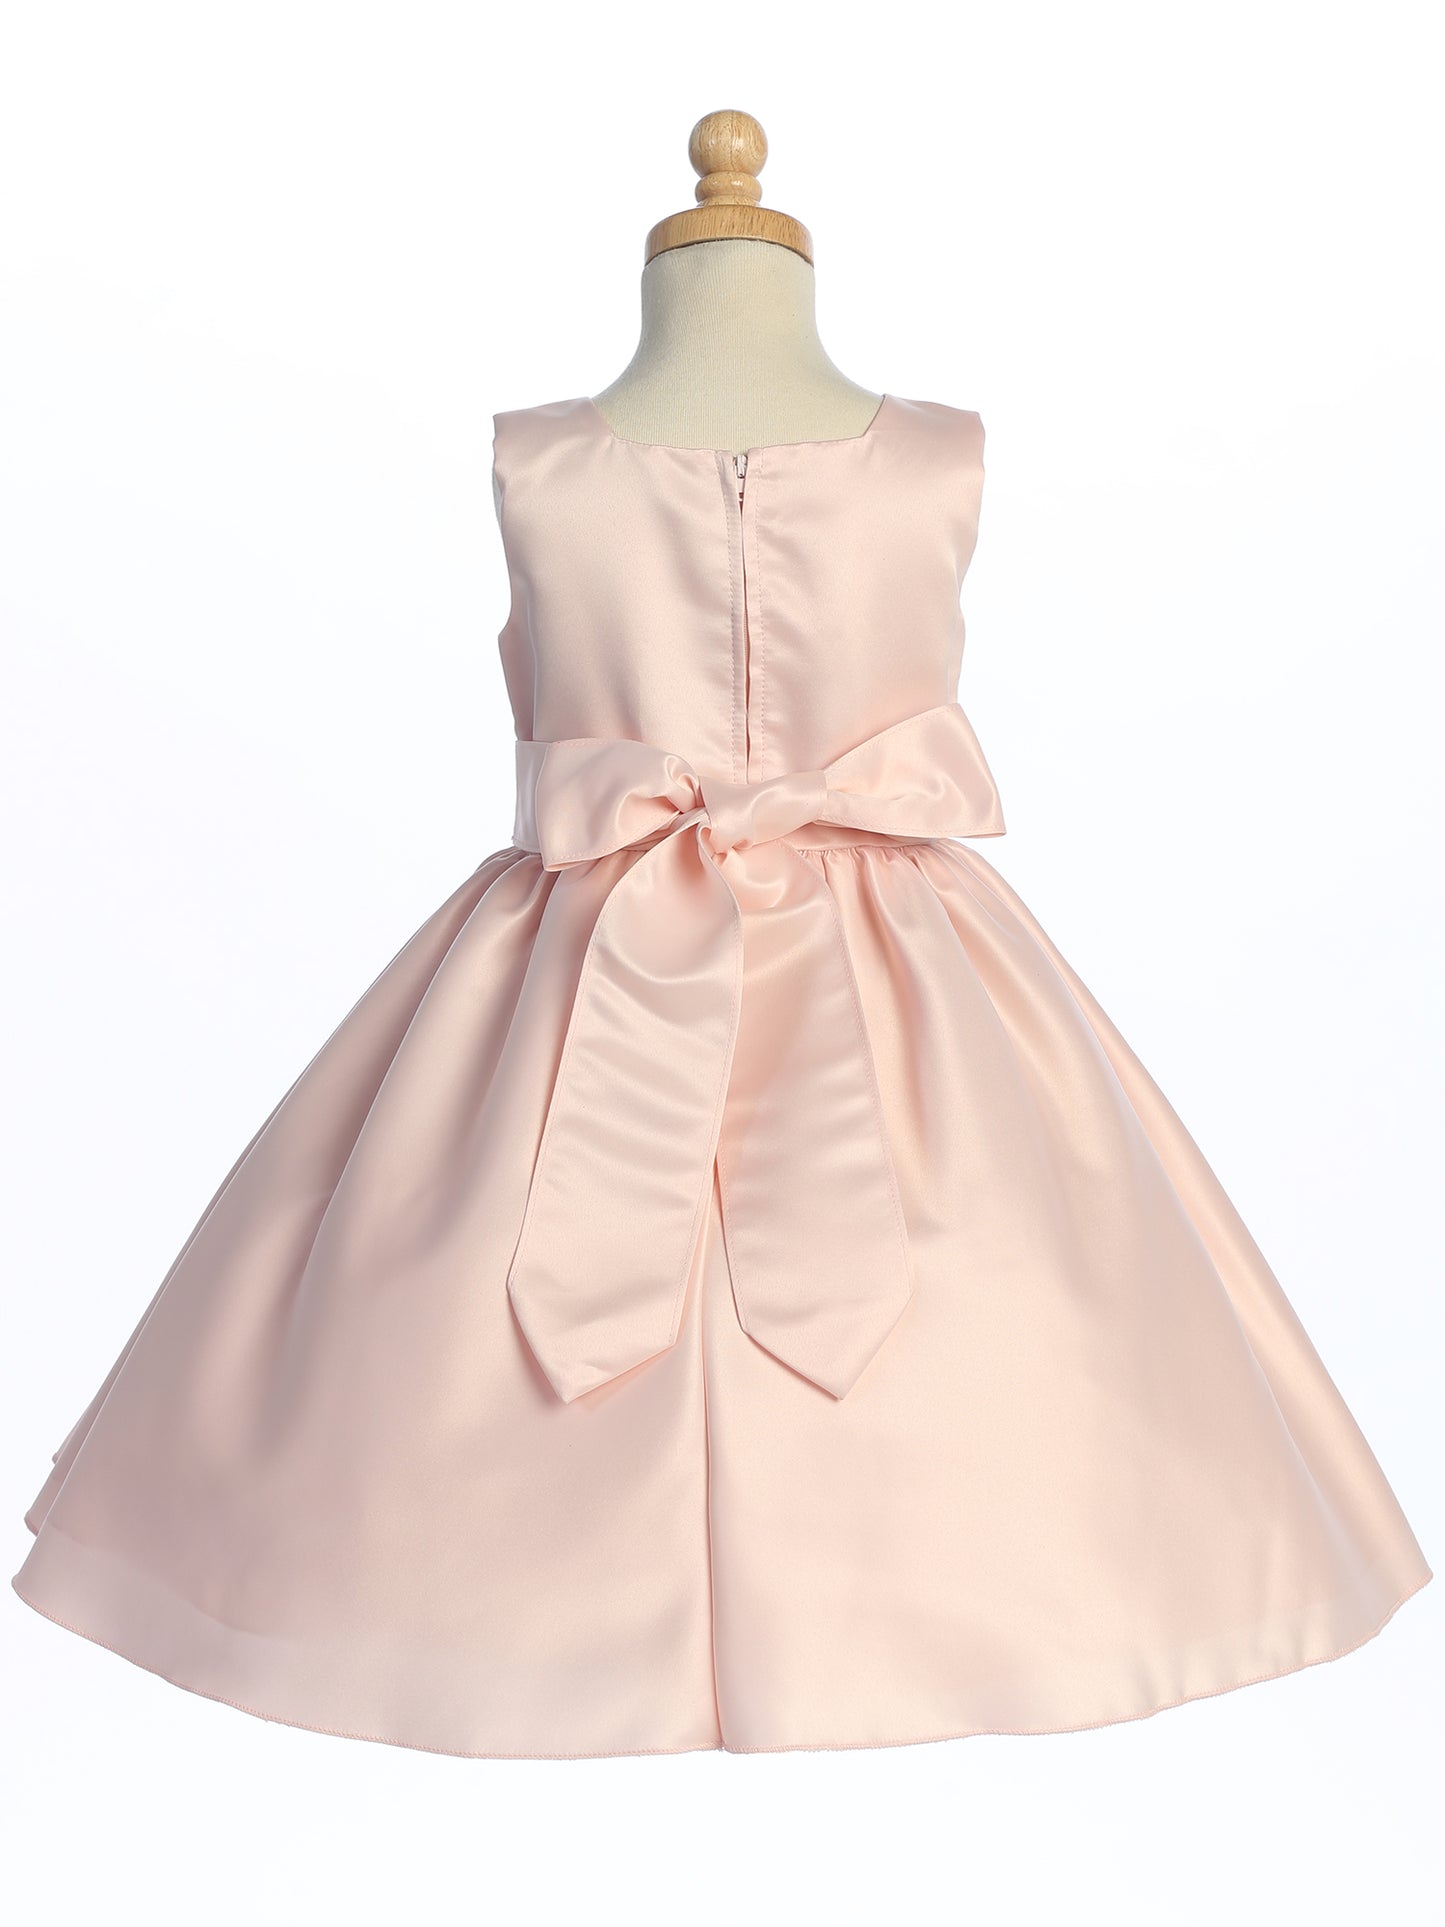 Satin Flower Girl Dress with Bow - Blush Pink - BL257-BLSH